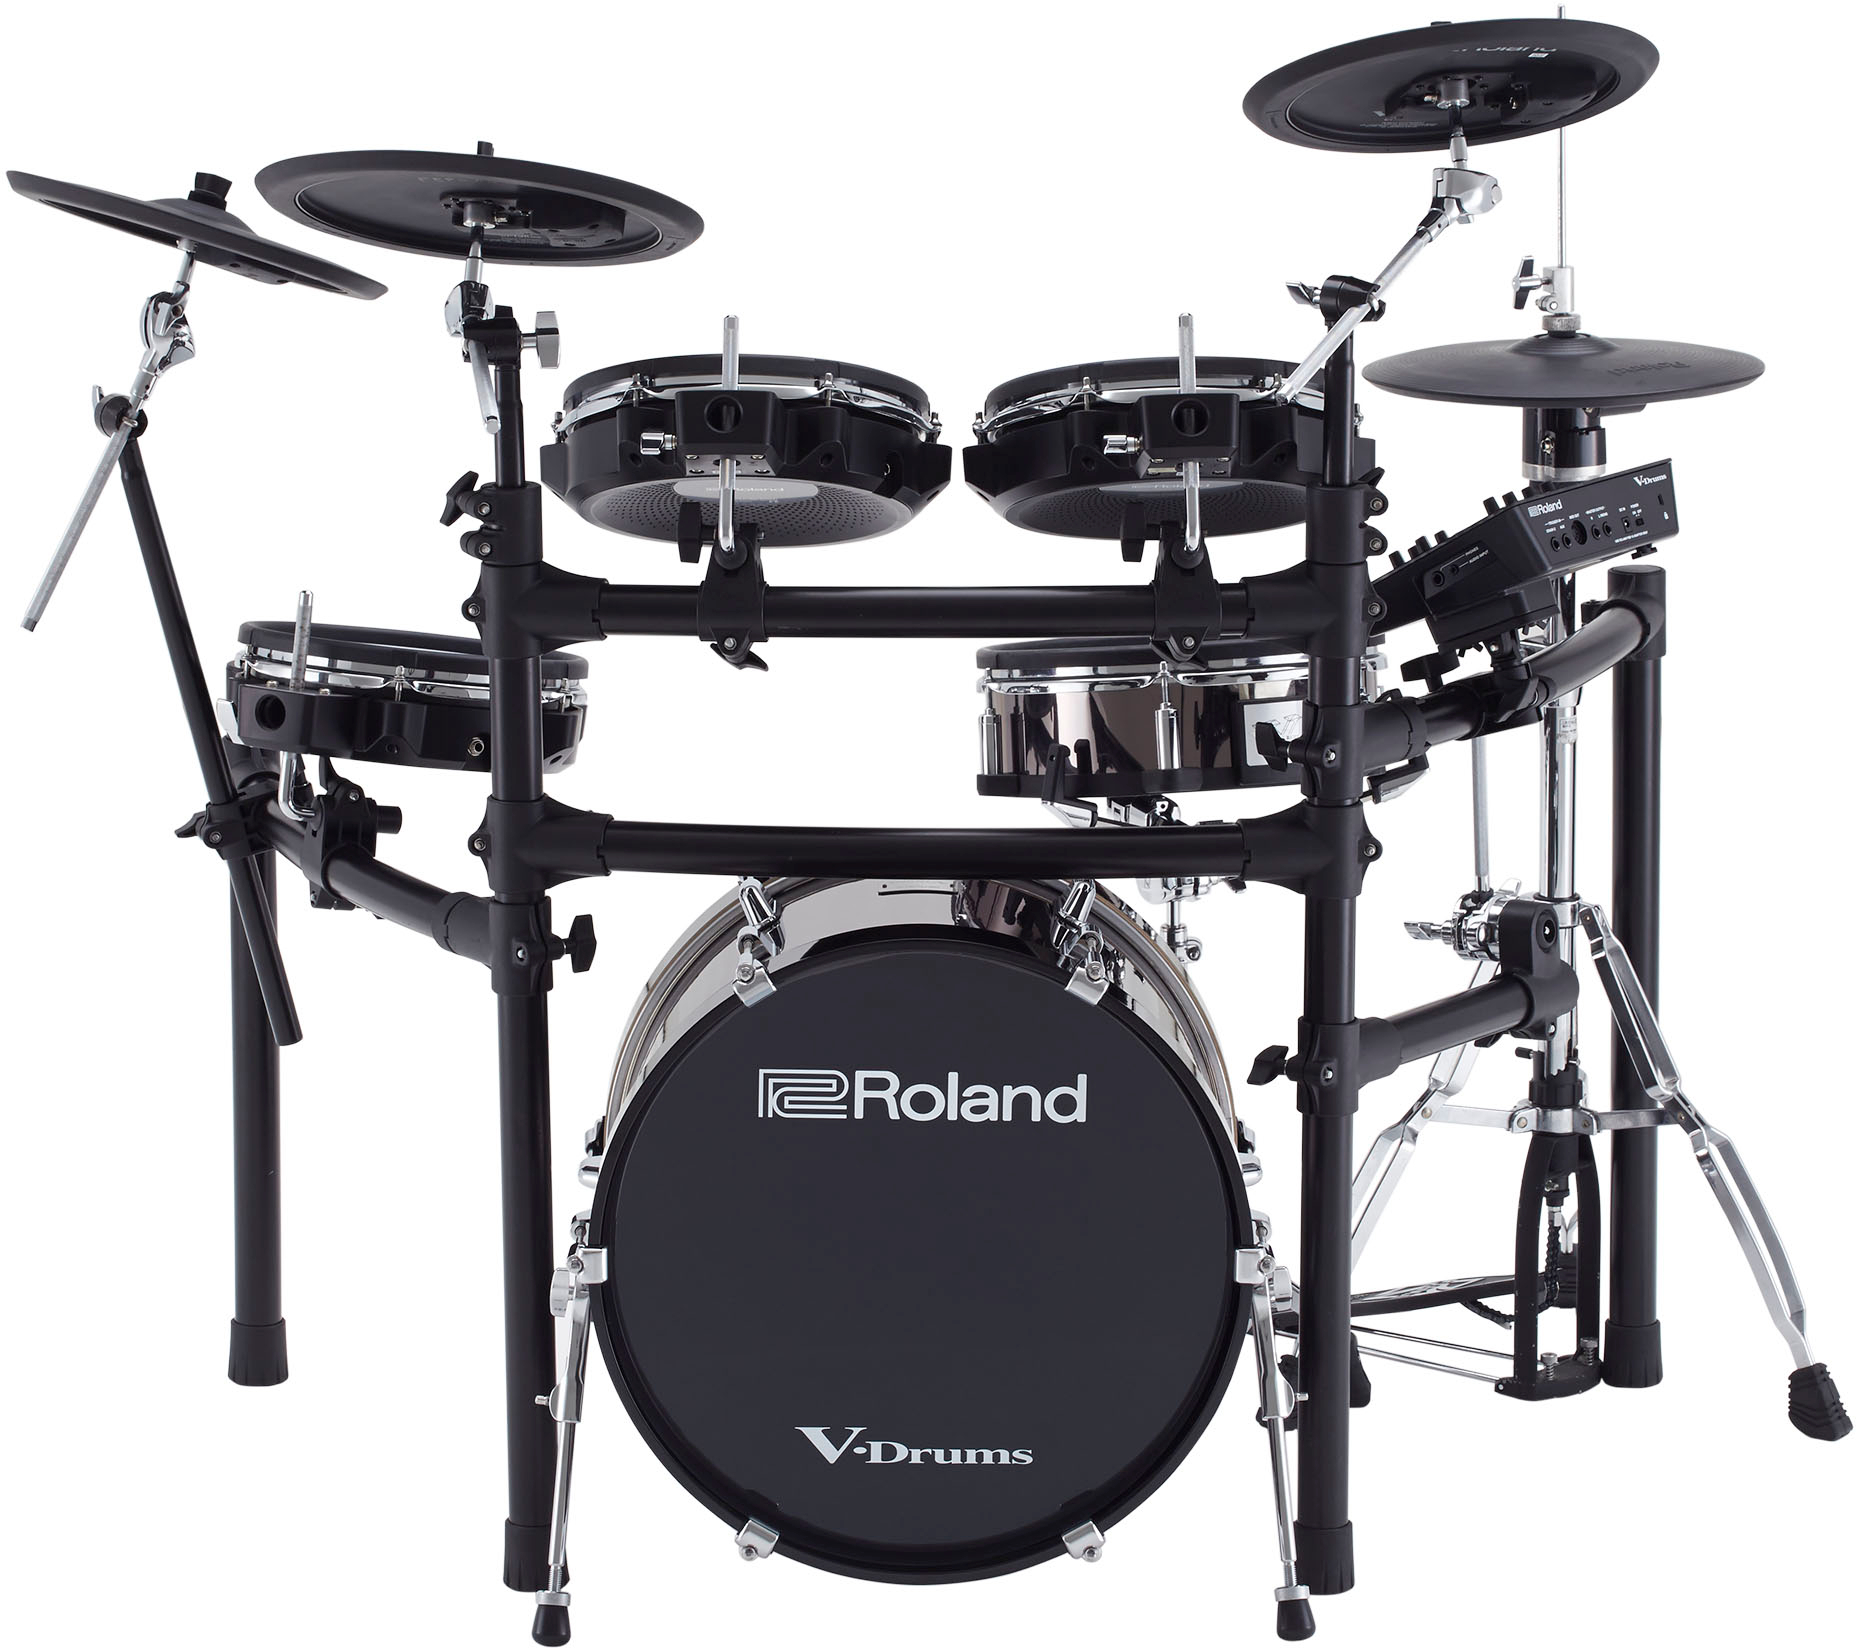 Roland Grosse Caisse V-drums Kd-180 - Kit Batterie Électronique - Variation 3